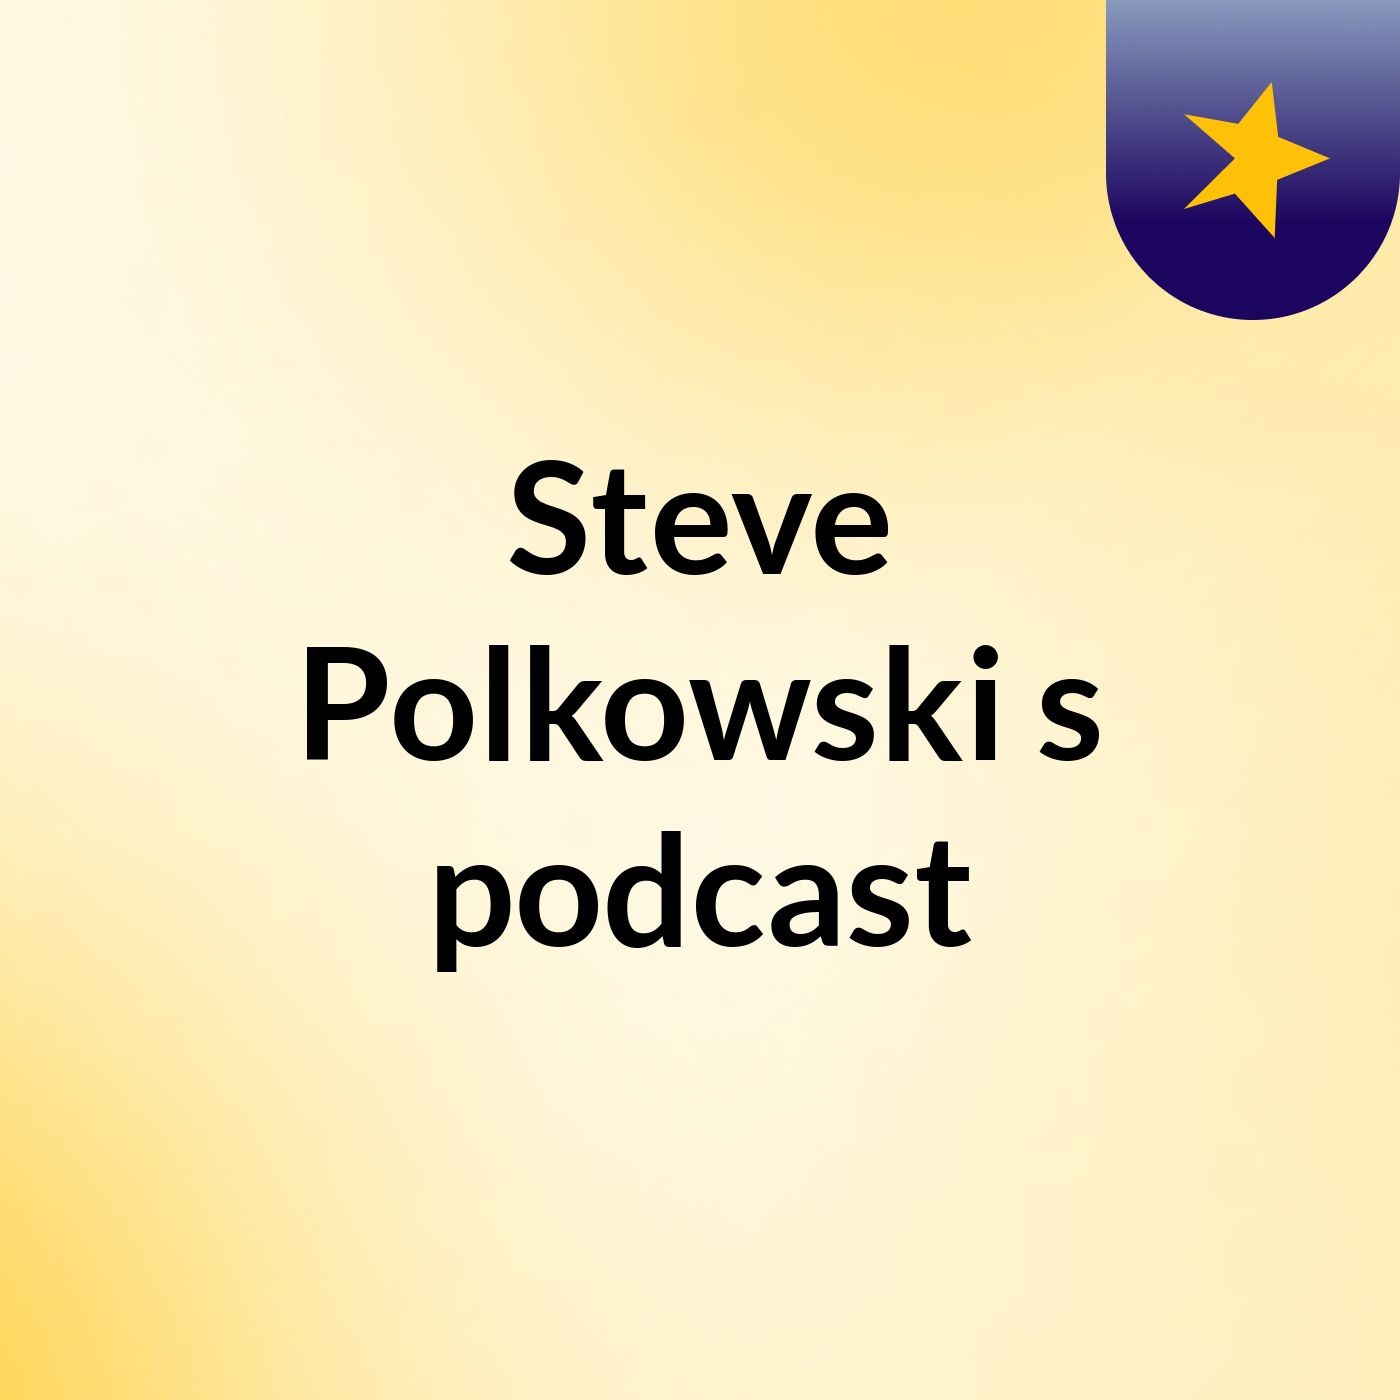 Episode 2 - Steve Polkowski's podcast